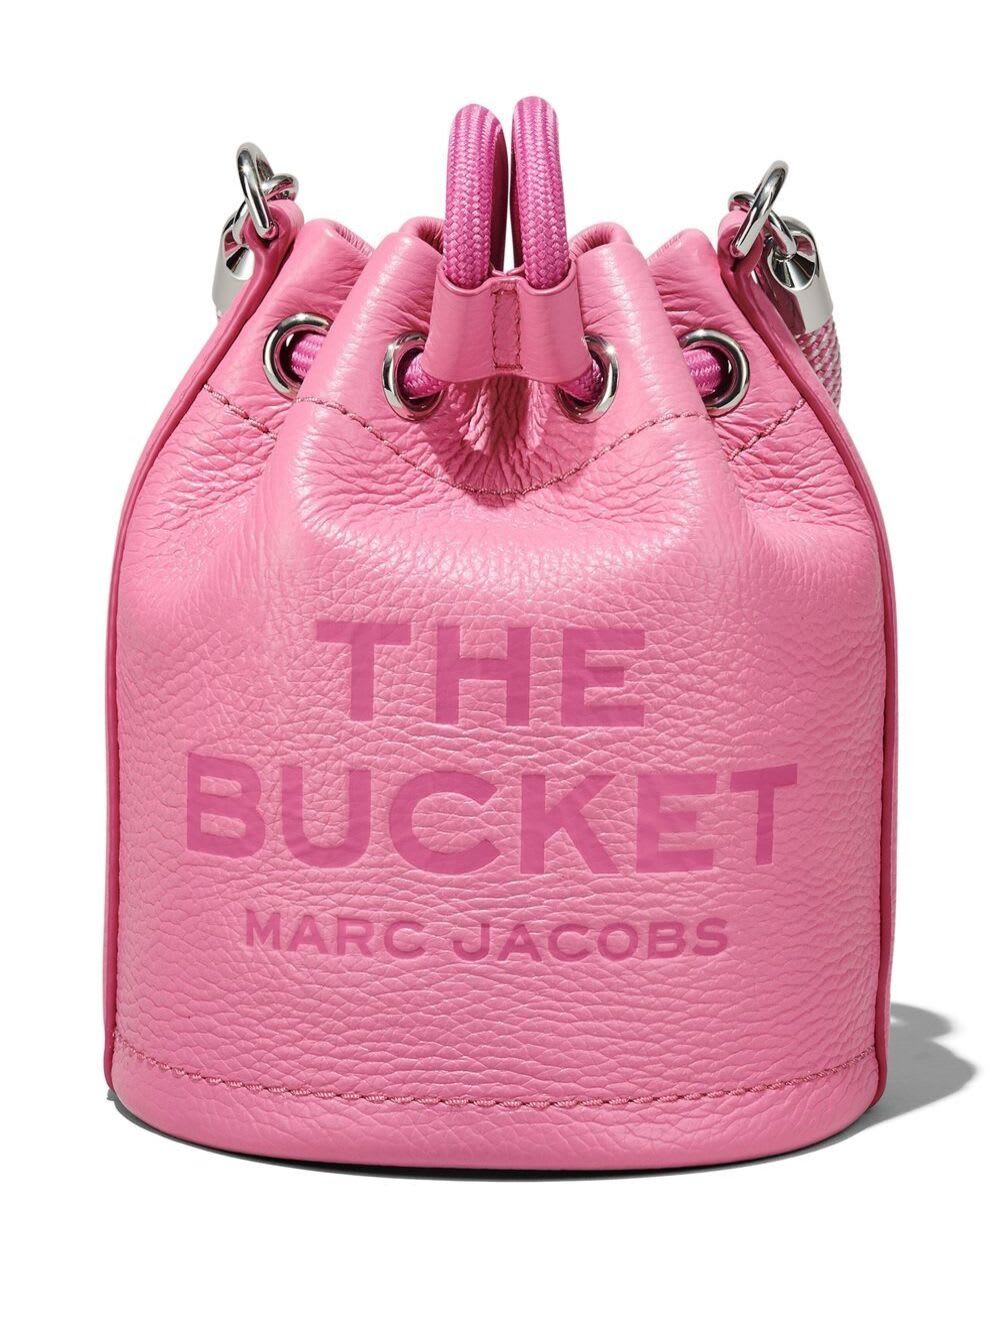 Marc Jacobs The Mini Bucket